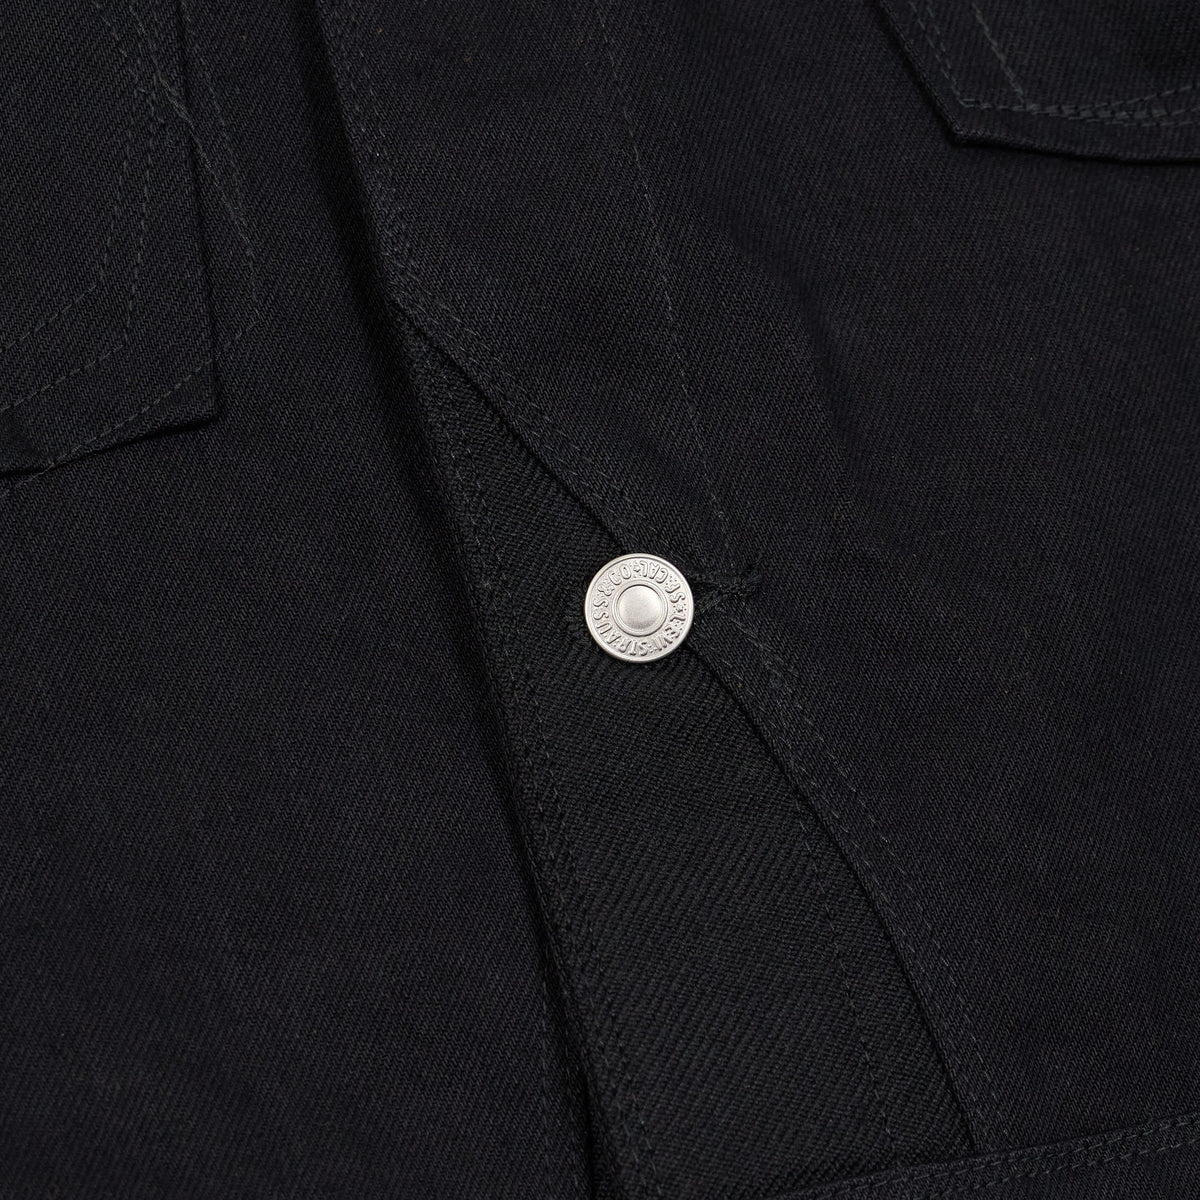 Junya Watanabe x Levis Eye Stiched Front Pockets Jacket